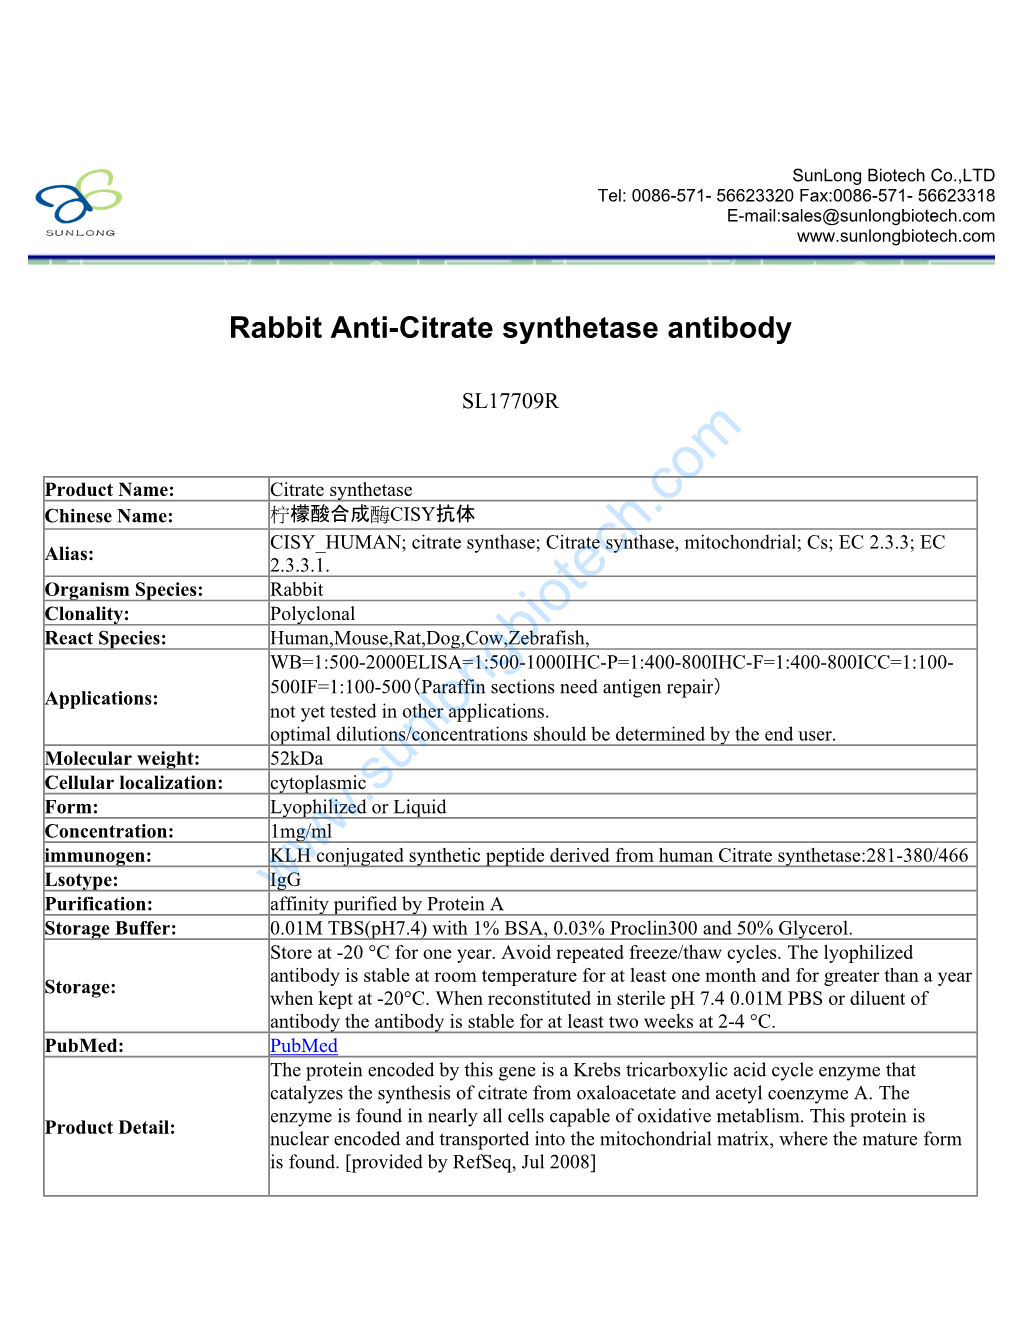 Rabbit Anti-Citrate Synthetase Antibody-SL17709R